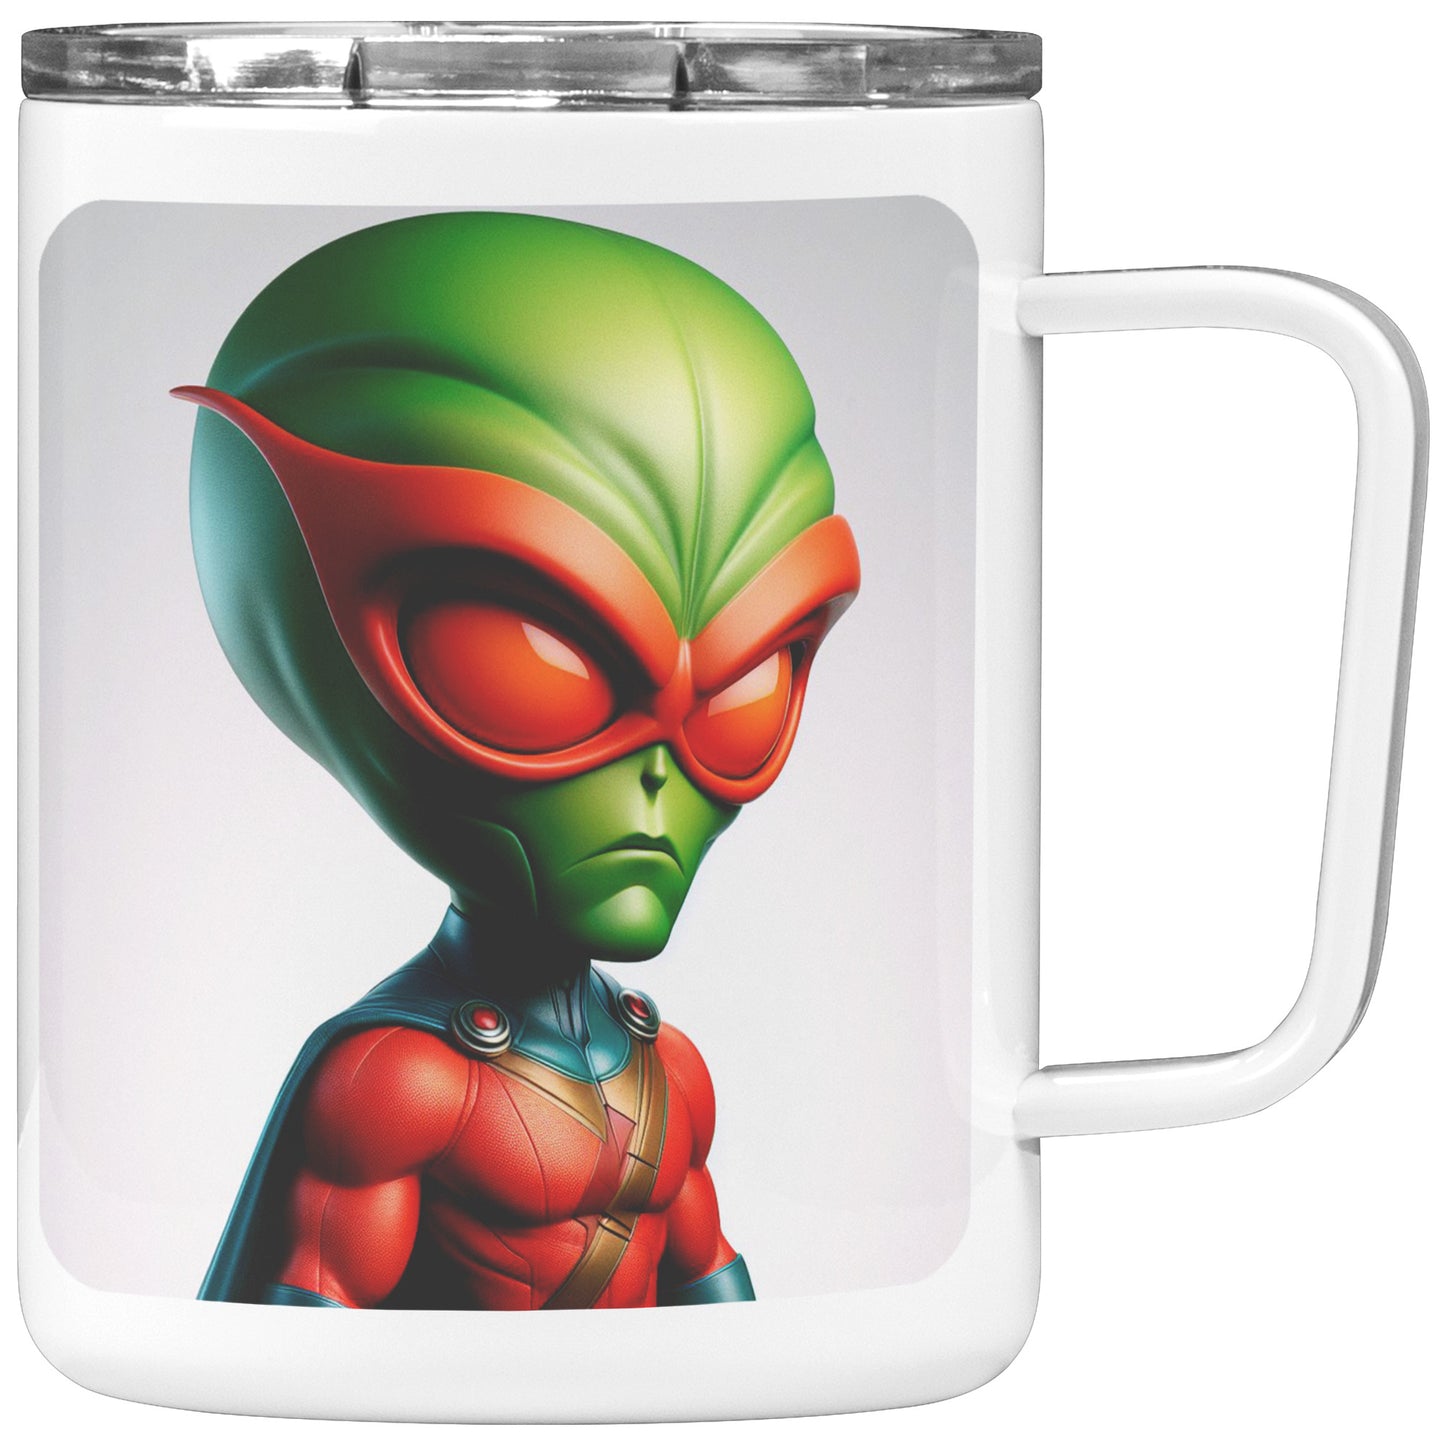 Martian Alien Caricature - Coffee Mug #12